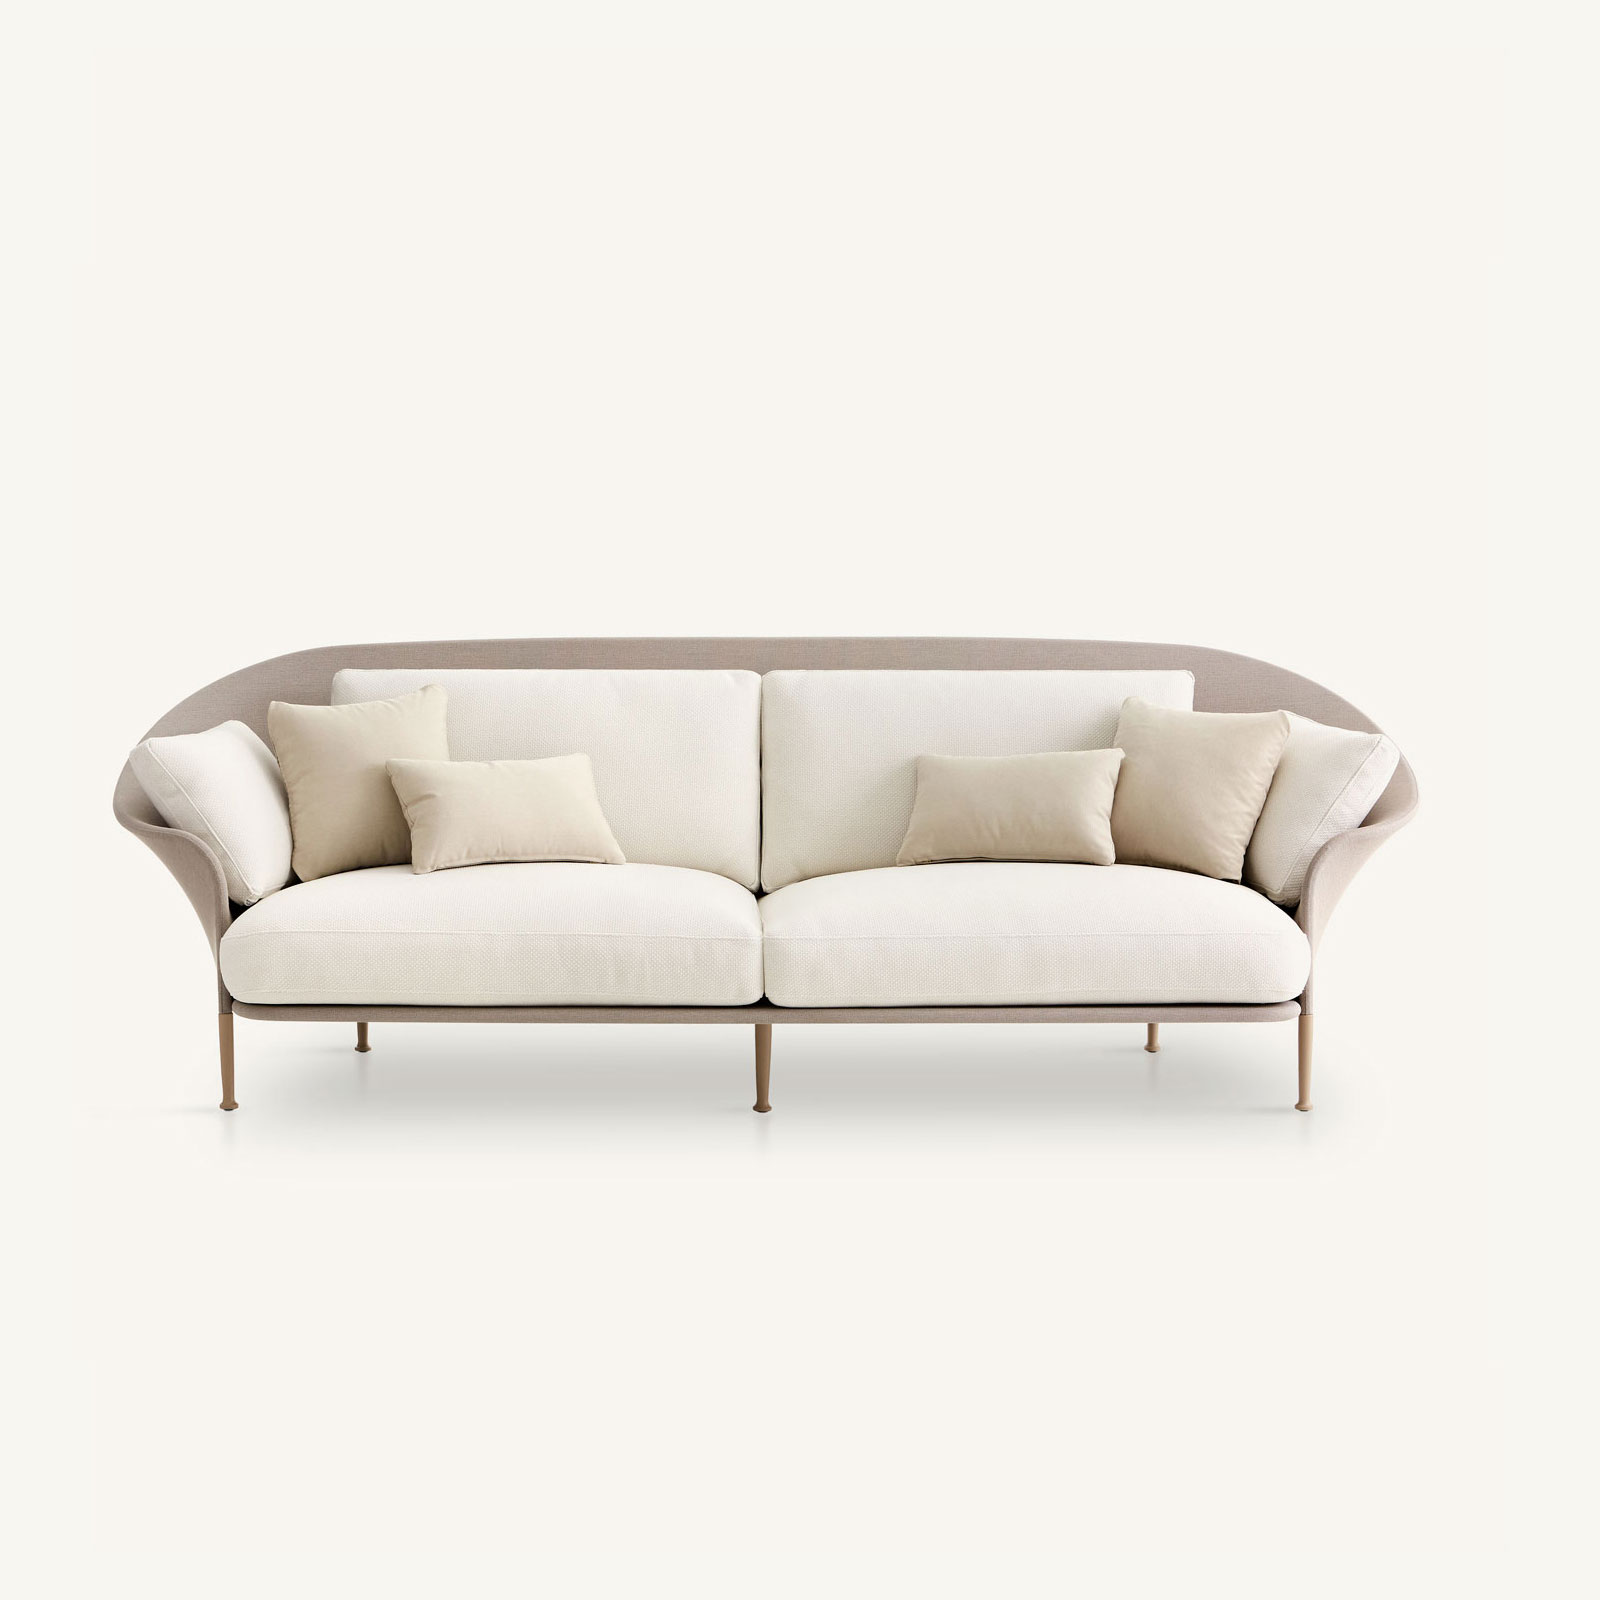 outdoor kollektion - sofas - xl-sofa liz